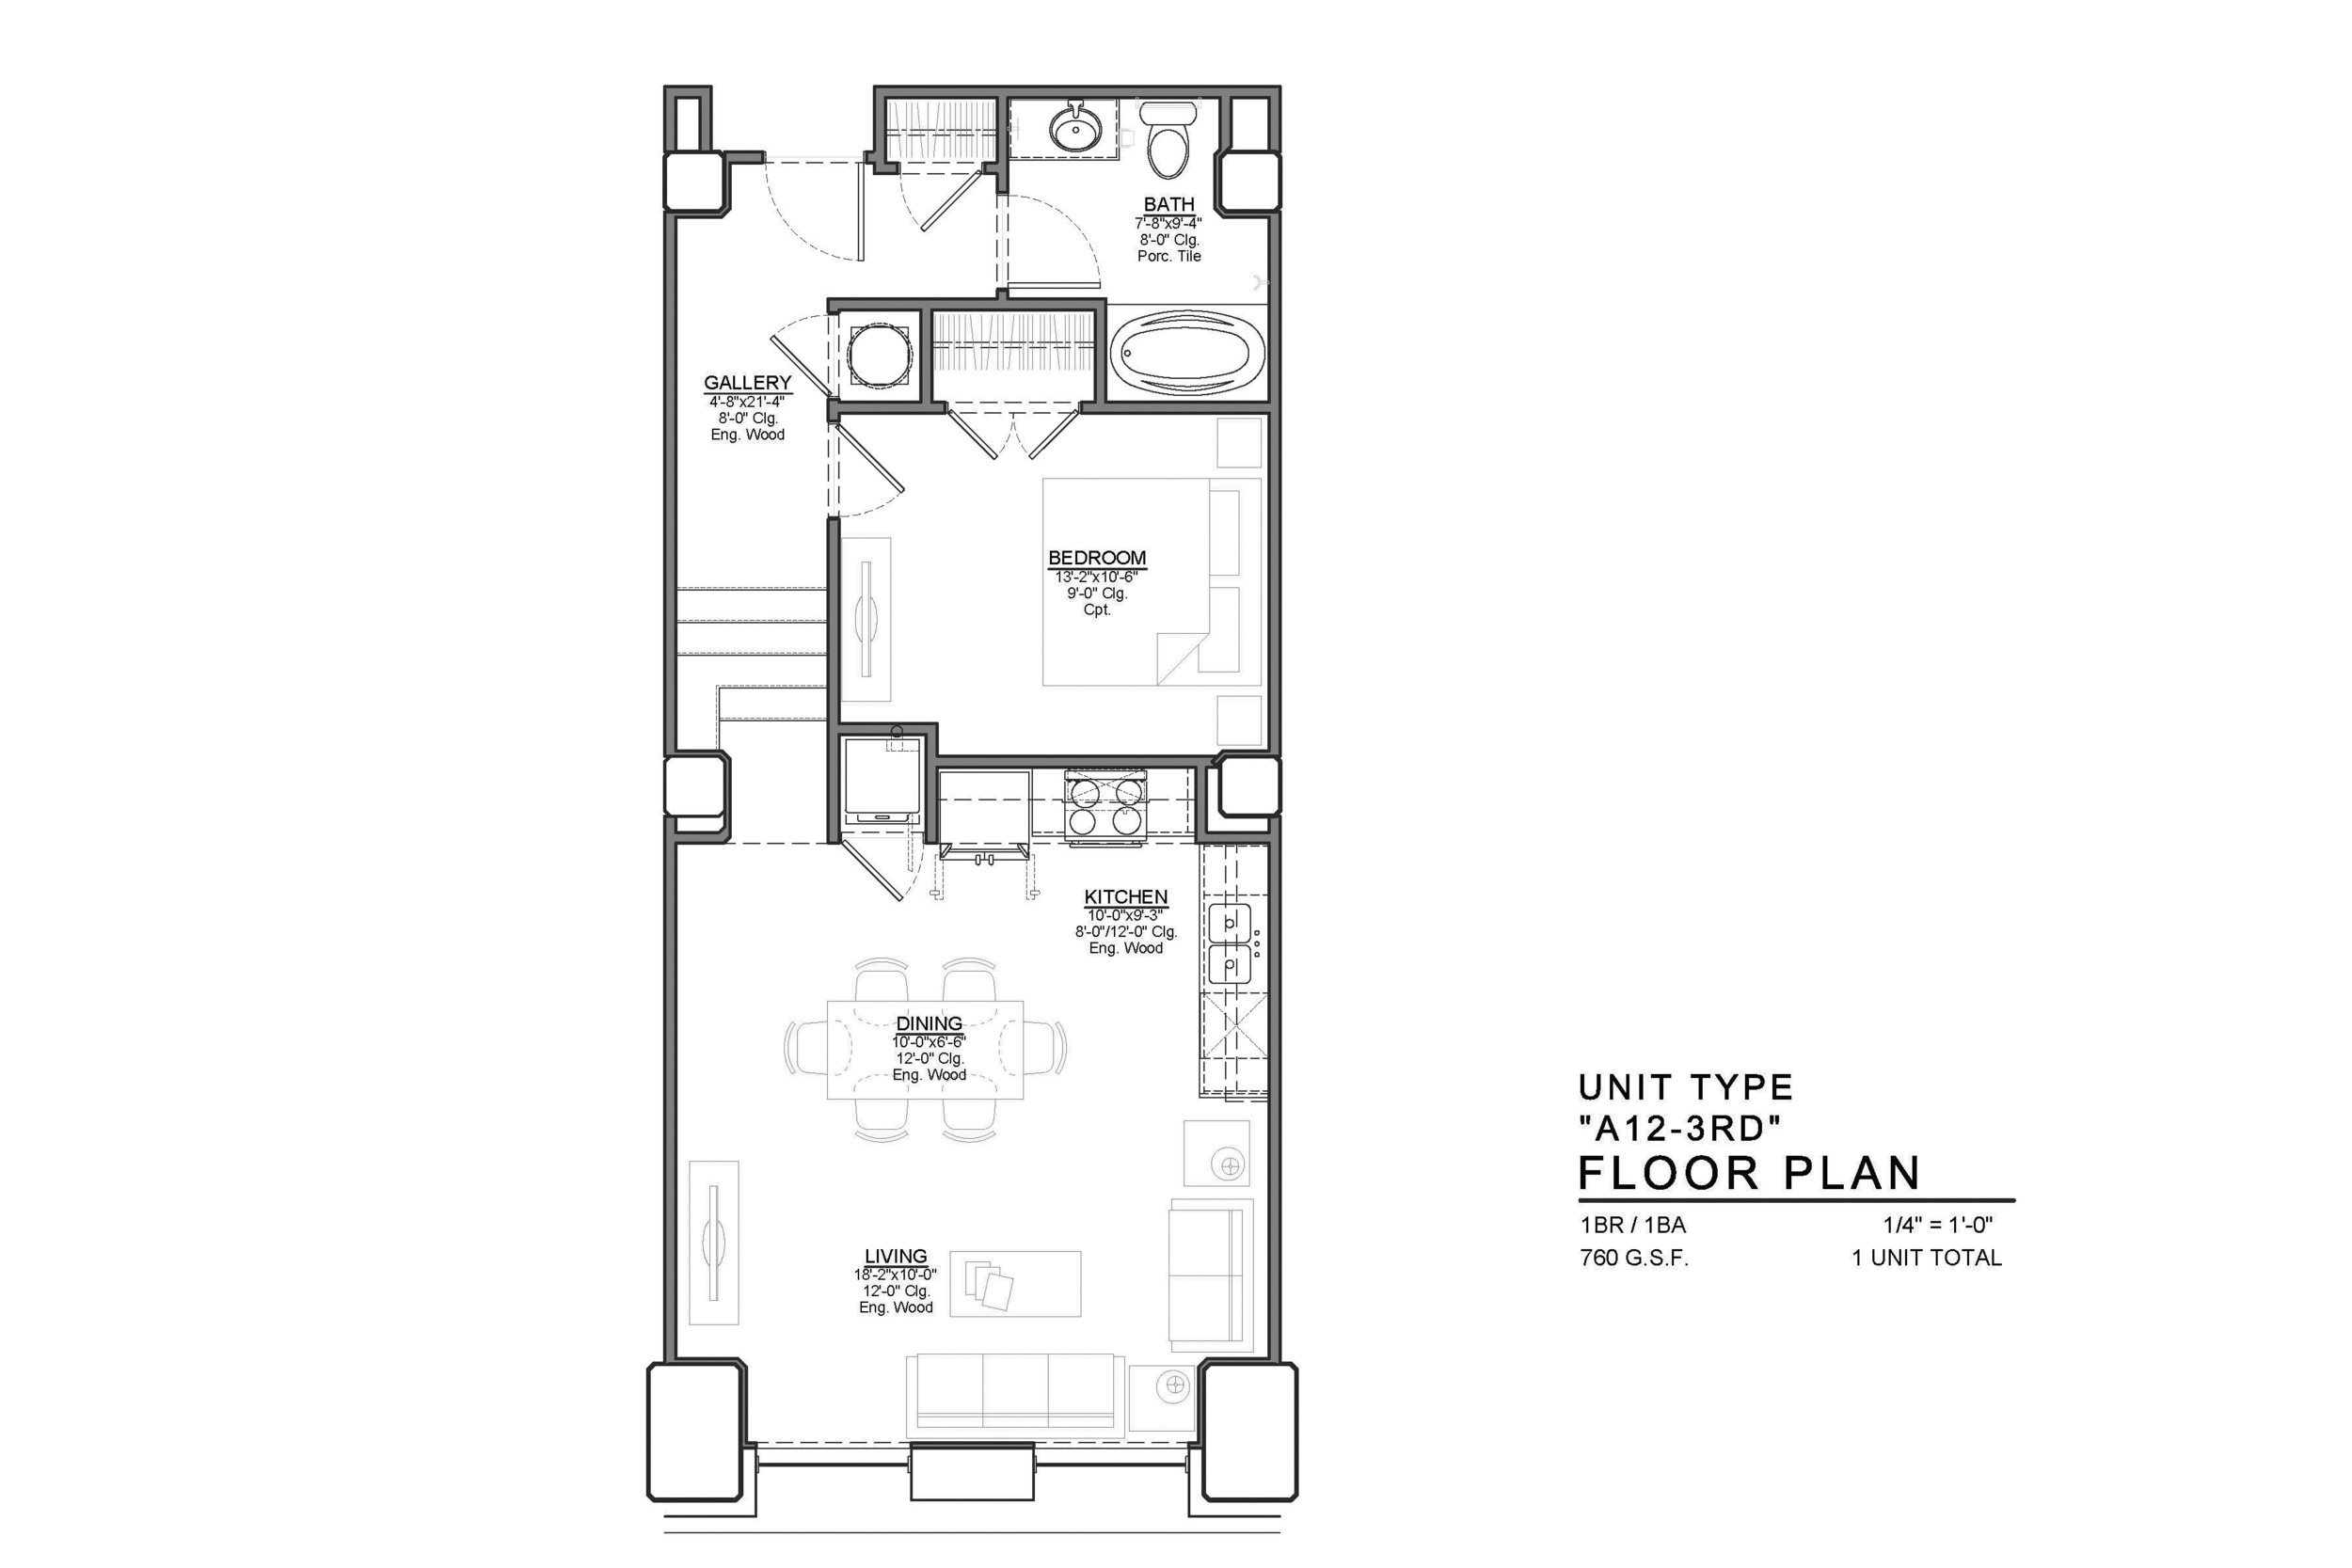 A12-3RD FLOOR PLAN: 1 BEDROOM / 1 BATH